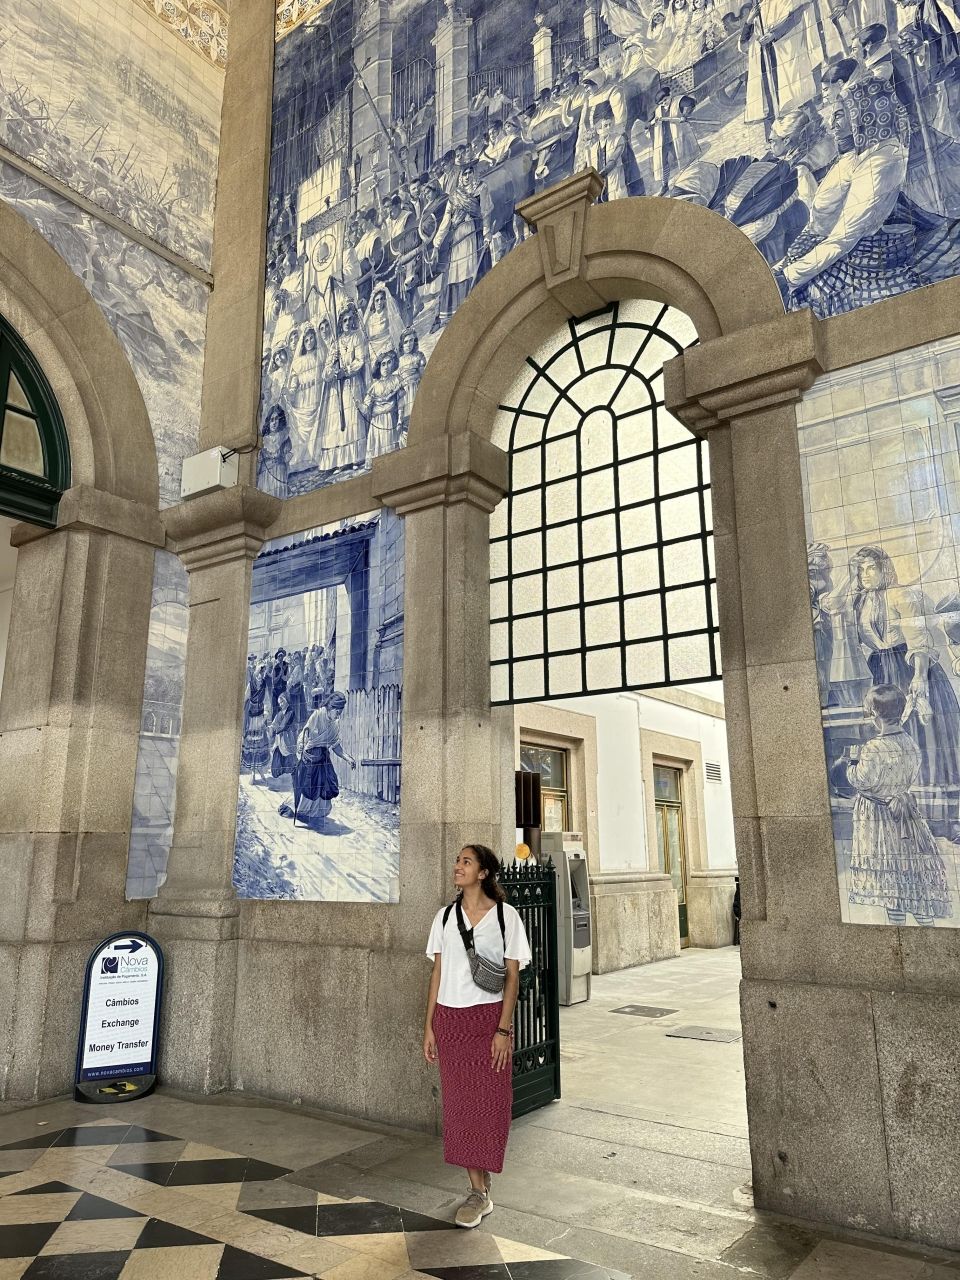 Me at train station in Porto, Portugal